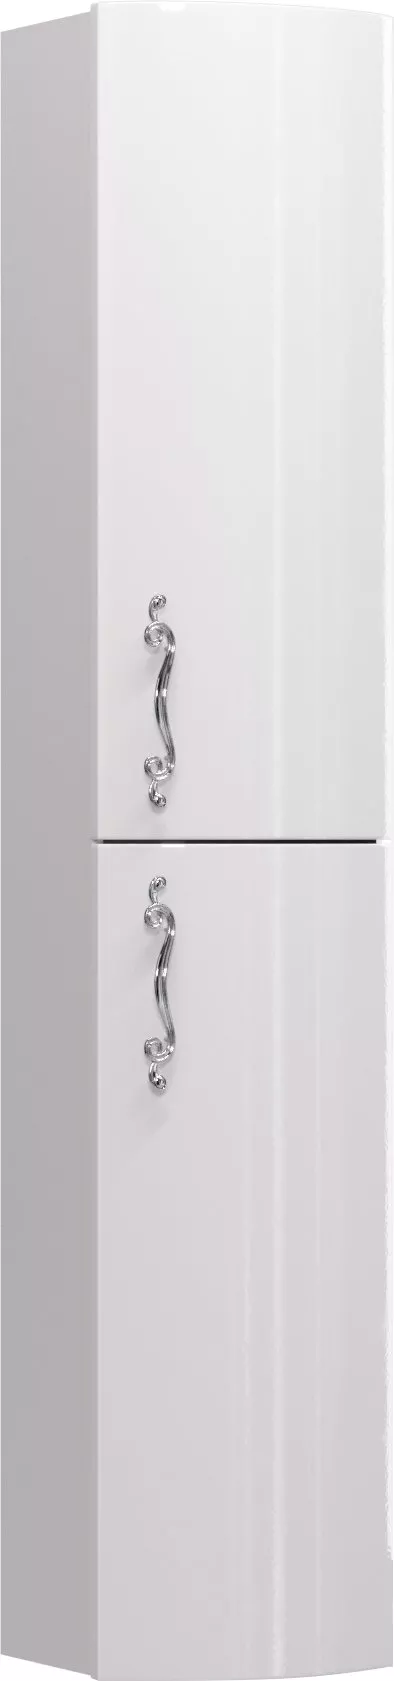 Шкаф-пенал Aima Design Amethyst 30 см (У52811), размер 30, цвет белый - фото 1